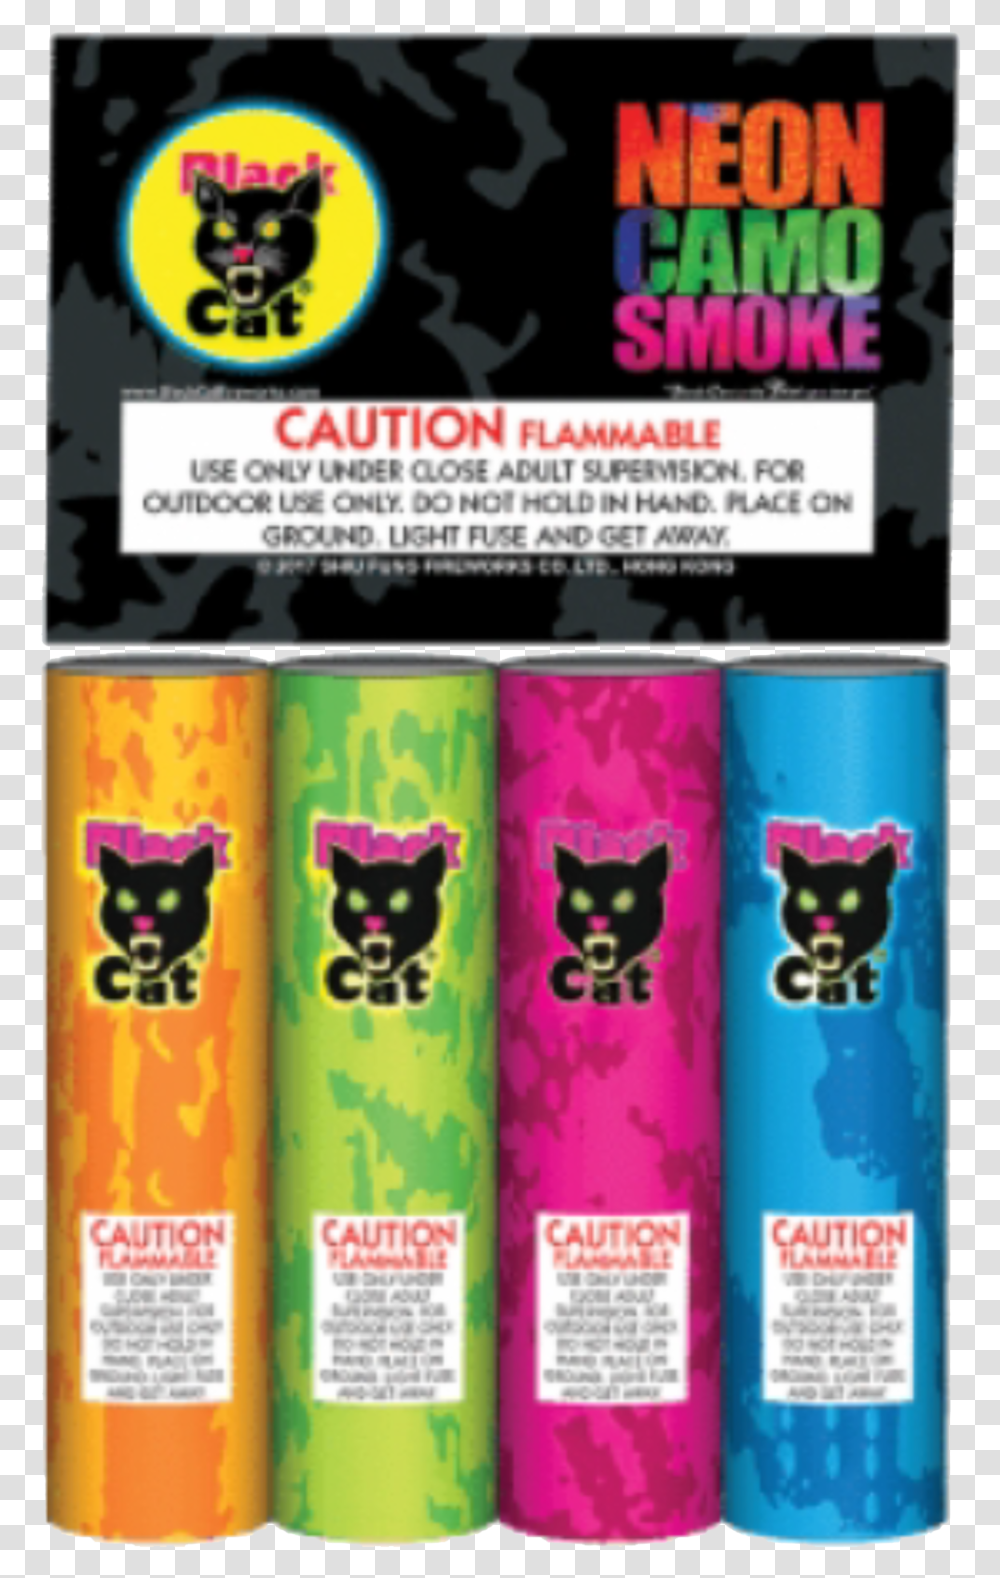 Black Cat Neon Camo Smoke Neon Camo Smoke Black Cat, Poster, Advertisement, Tin, Pet Transparent Png